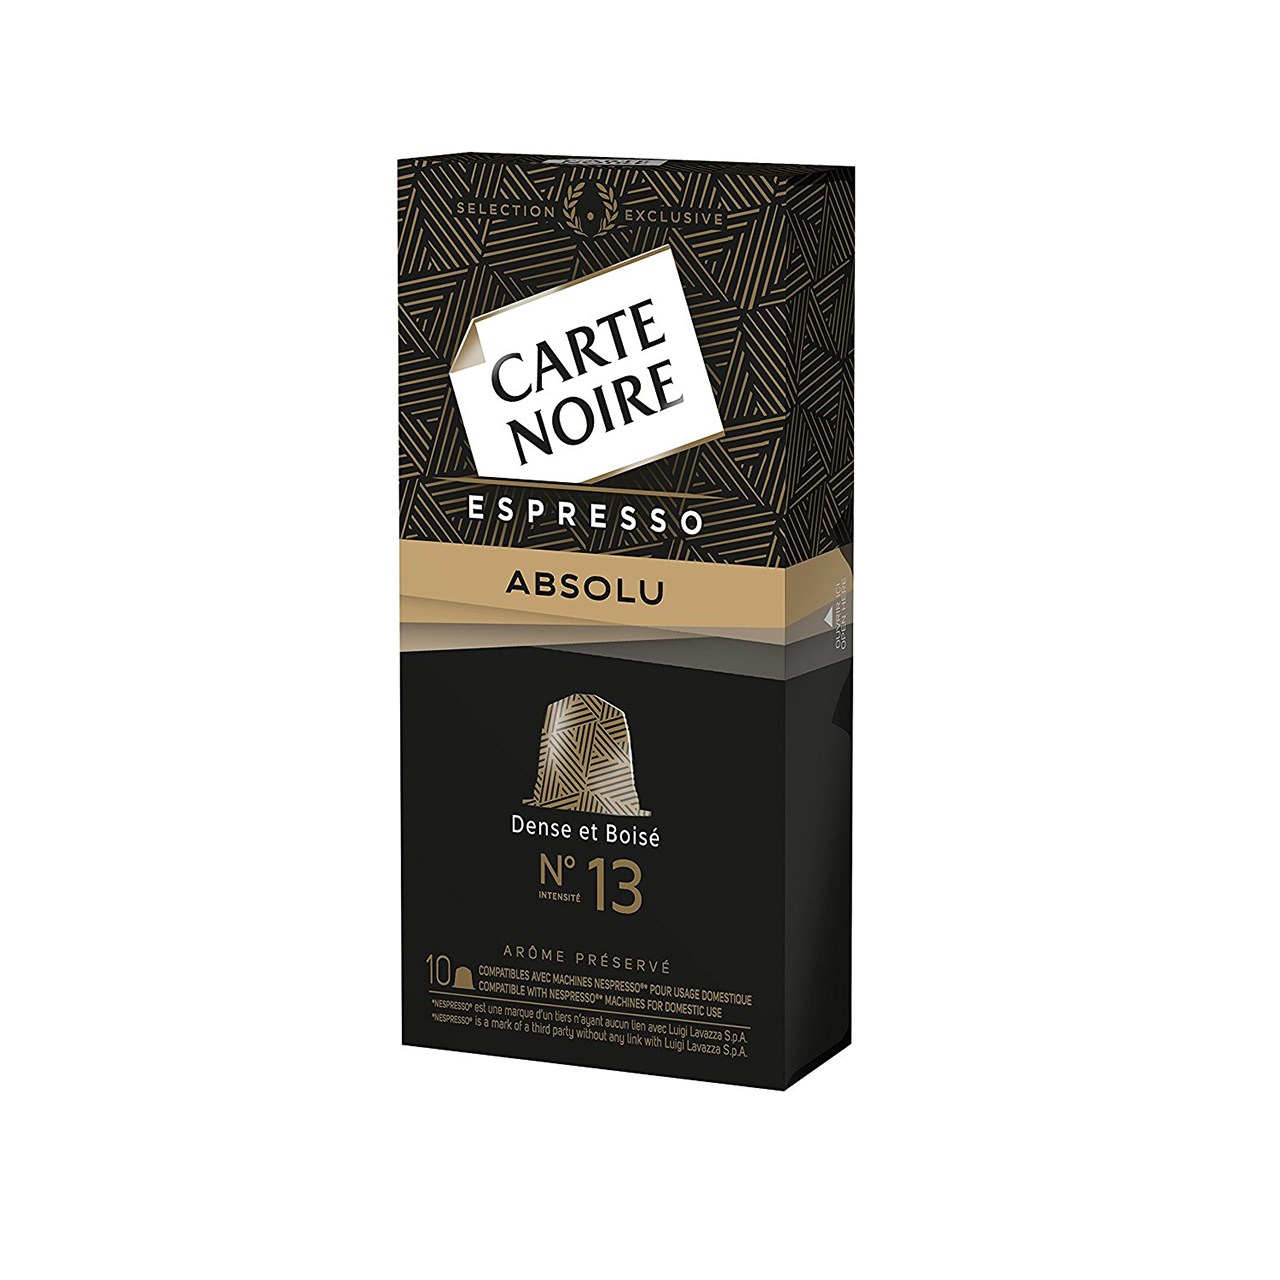 کپسول قهوه کارته نویر مدل Espresso Absolu